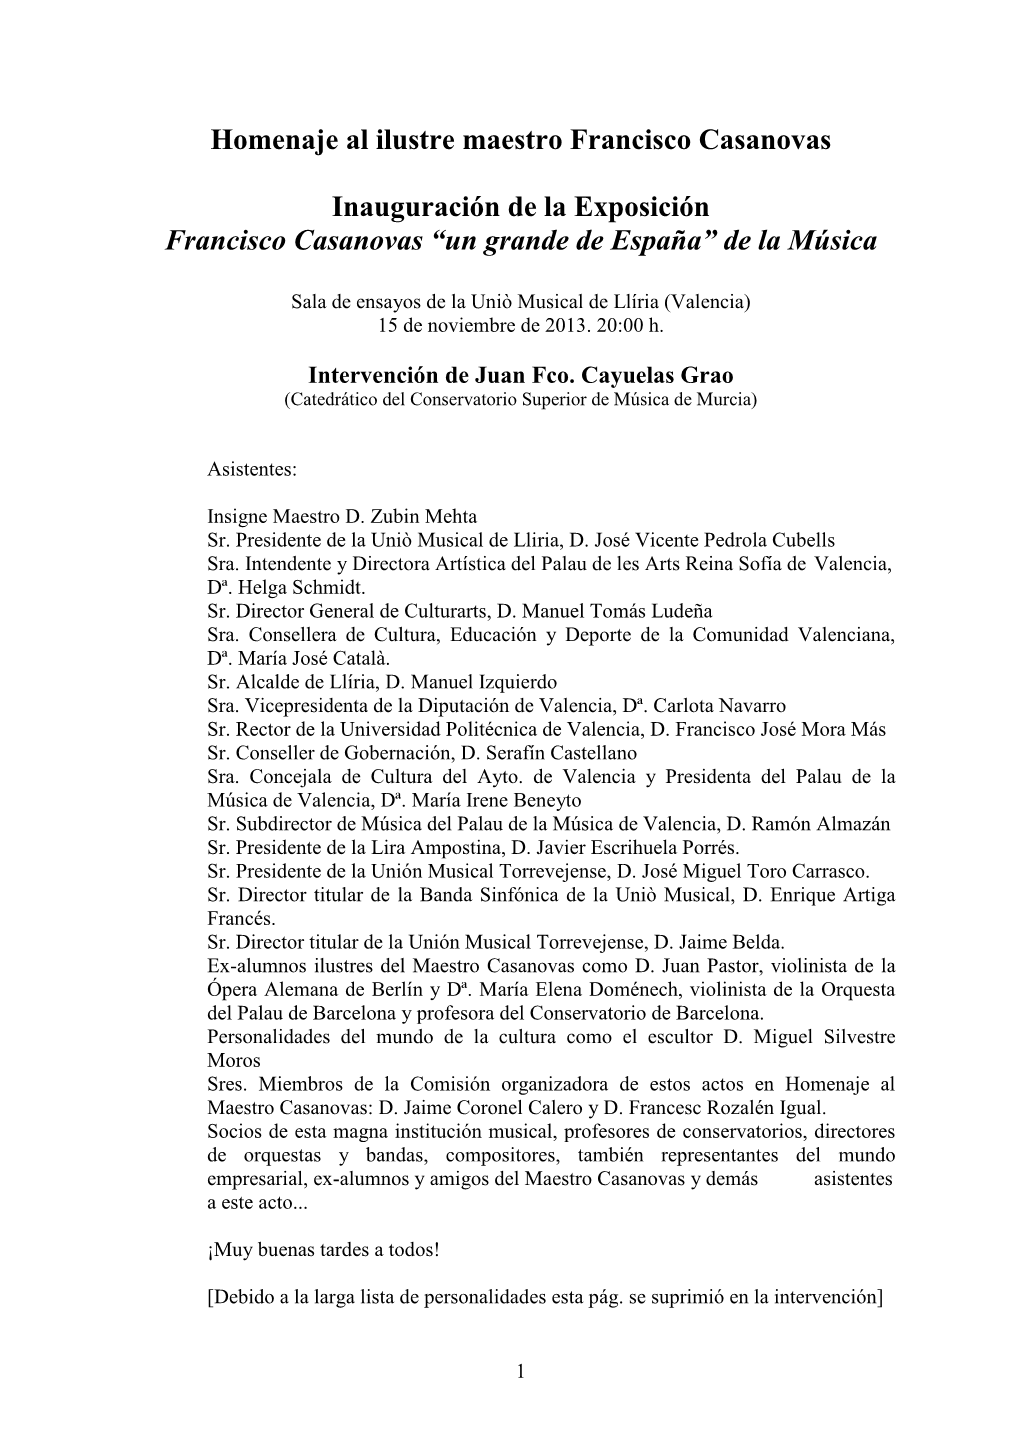 Intervención De Juan Fco. Cayuelas Grao (Catedrático Del Conservatorio Superior De Música De Murcia)